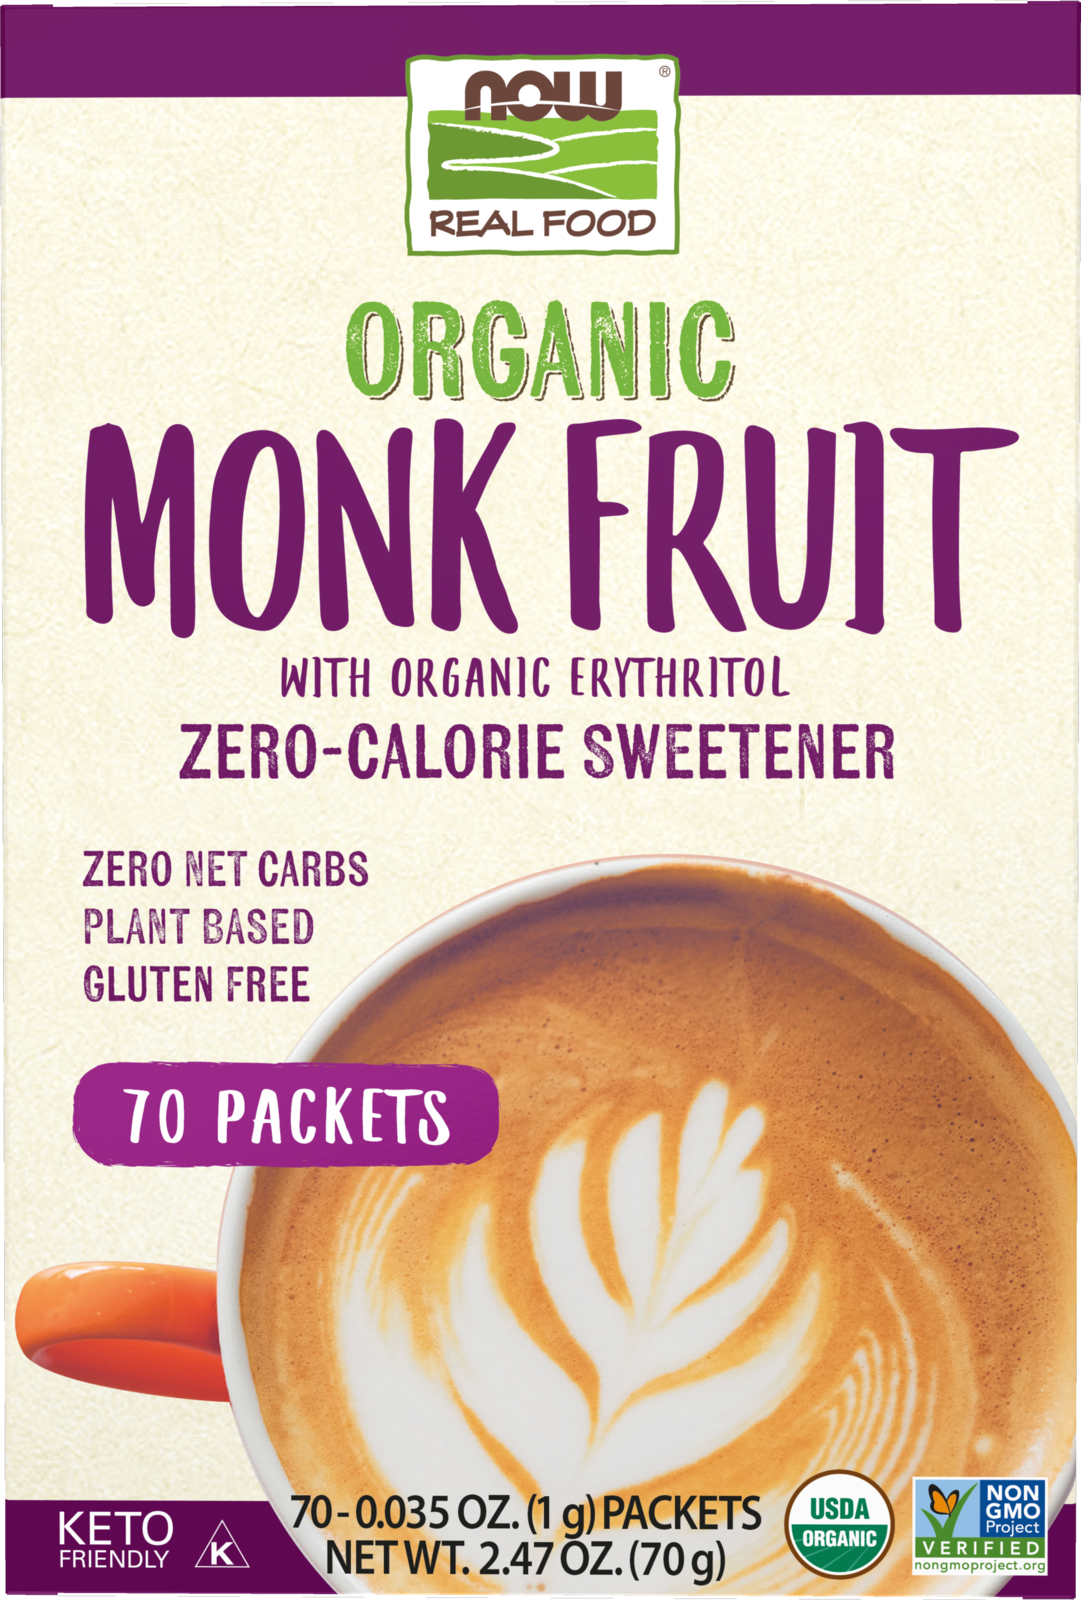 Allulose + Monk Fruit ZERO Calorie Sugar – Pure, Natural, Zero Calorie –  MyCerealMix